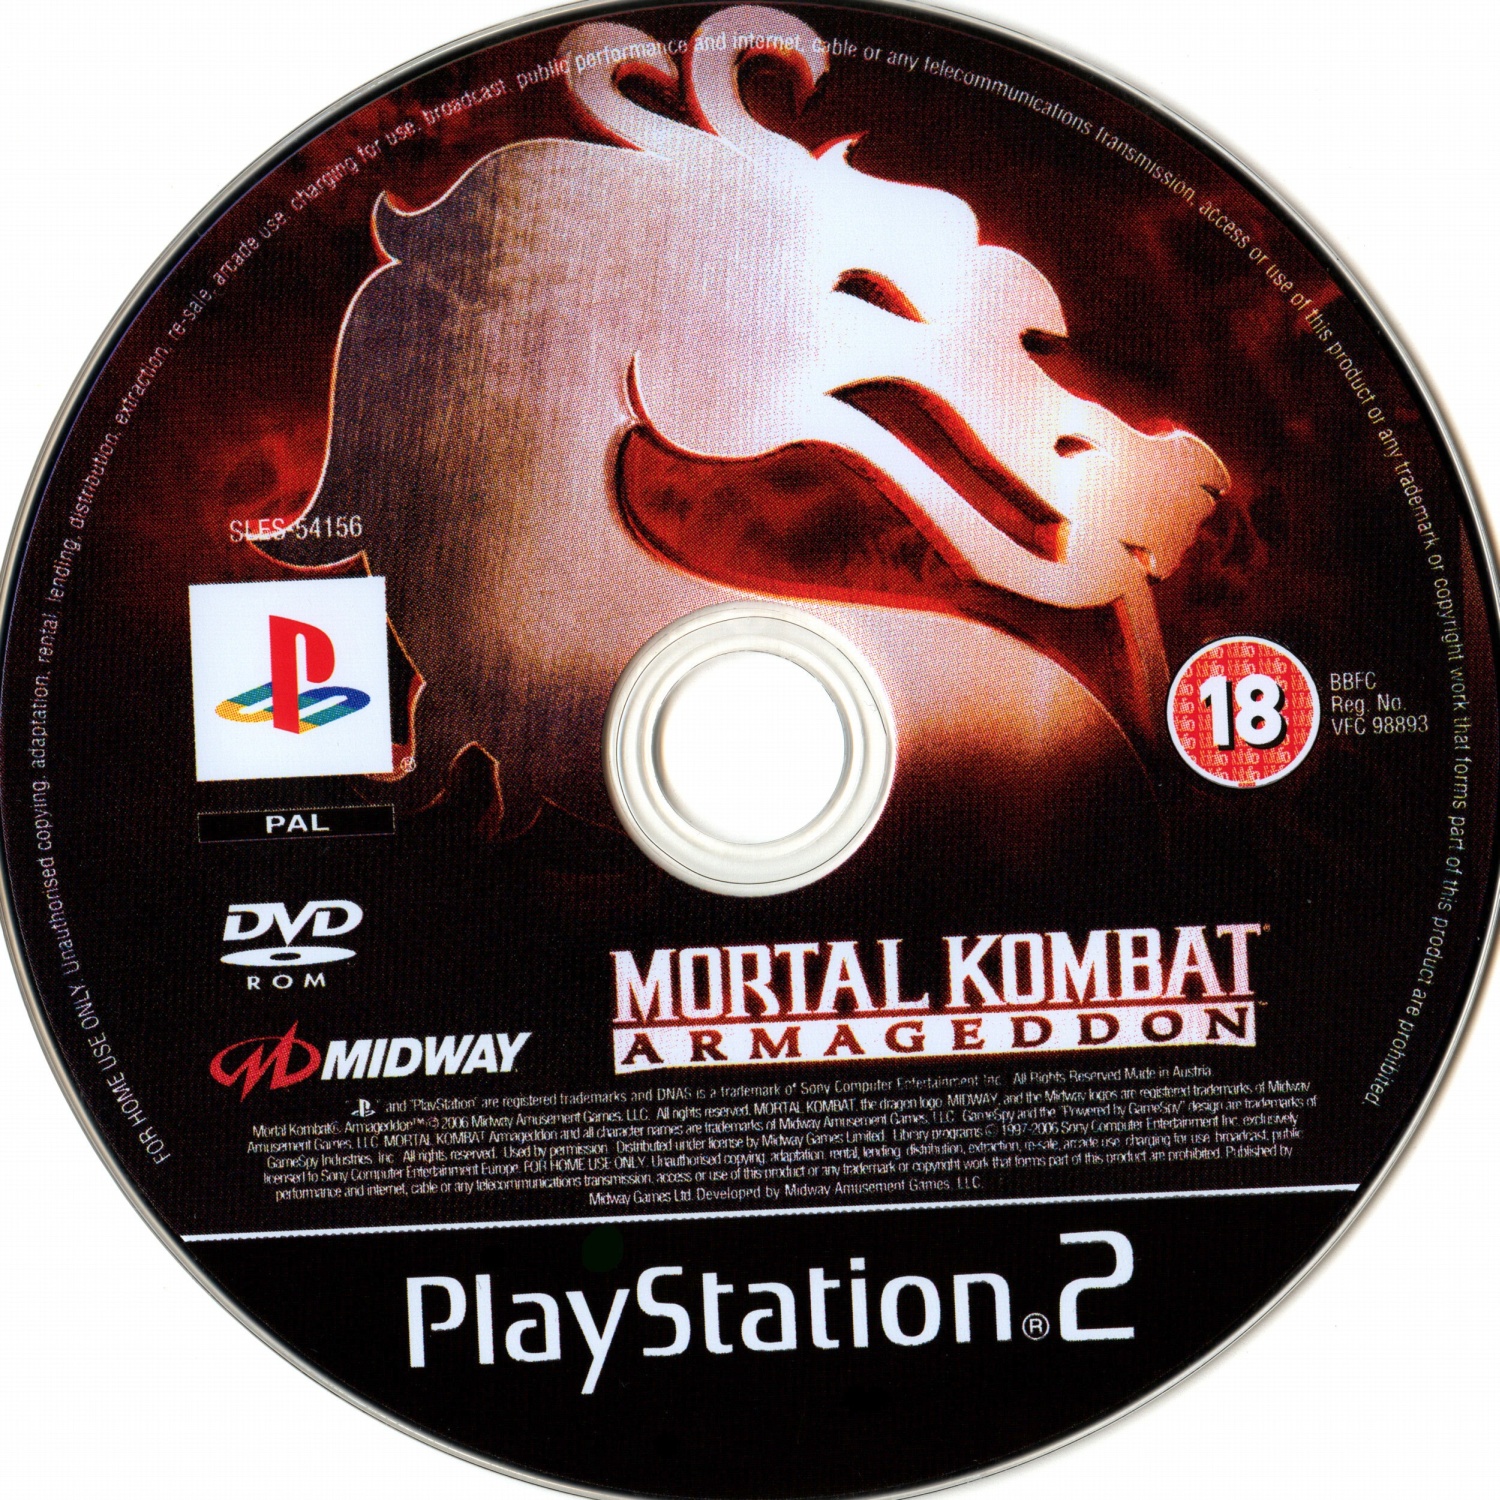 Iso образ игр ps2. MK Armageddon ps2 Cover. Диски на Sony PLAYSTATION 4 Mortal Kombat. Mortal Kombat 3 ps1 диск. Mortal Armageddon ps2 диск.